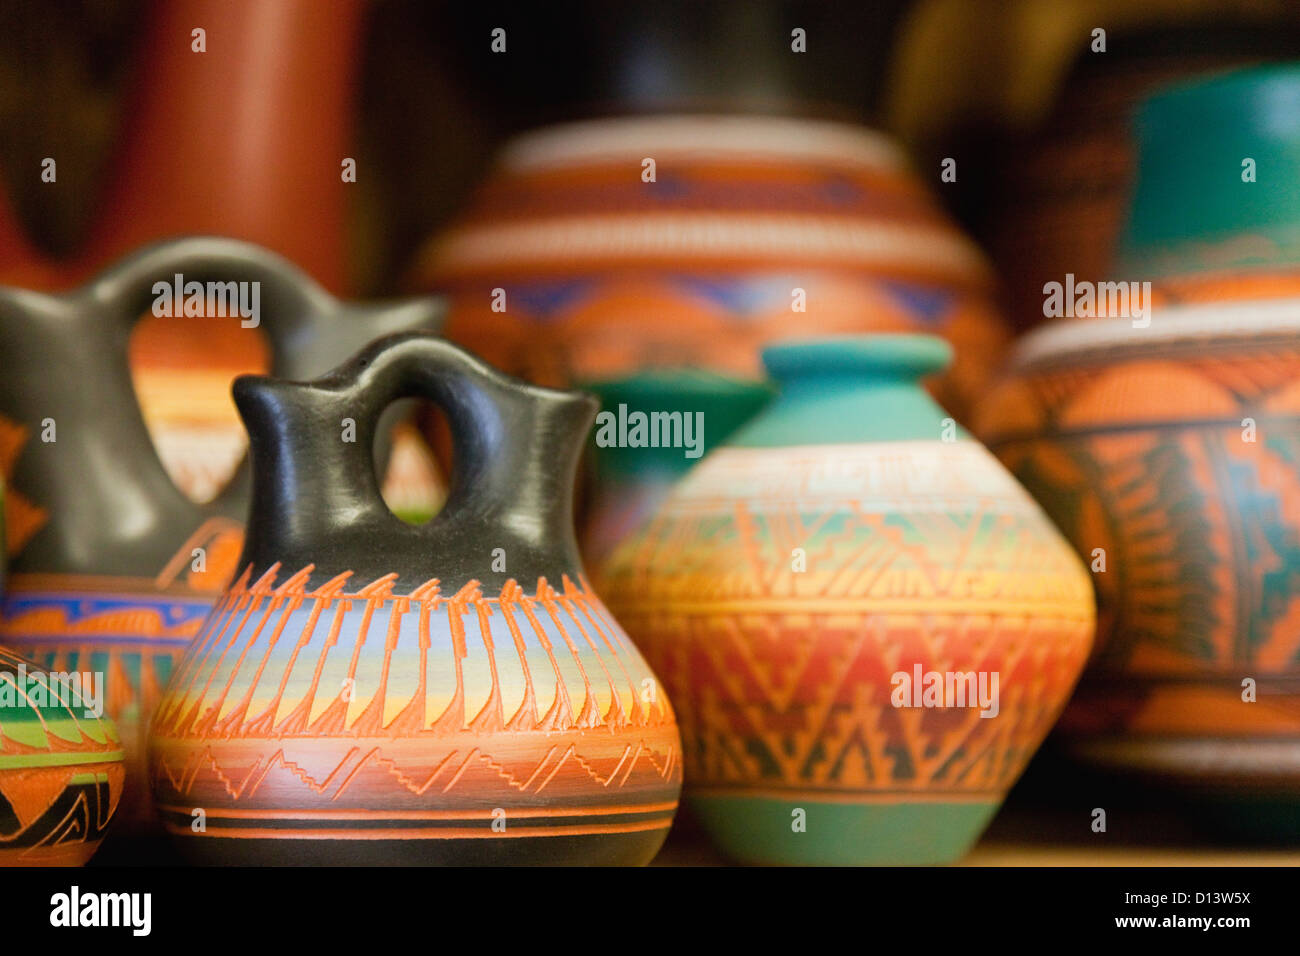 USA, Arizona, Phoenix, Row of colorful clay vases Stock Photo